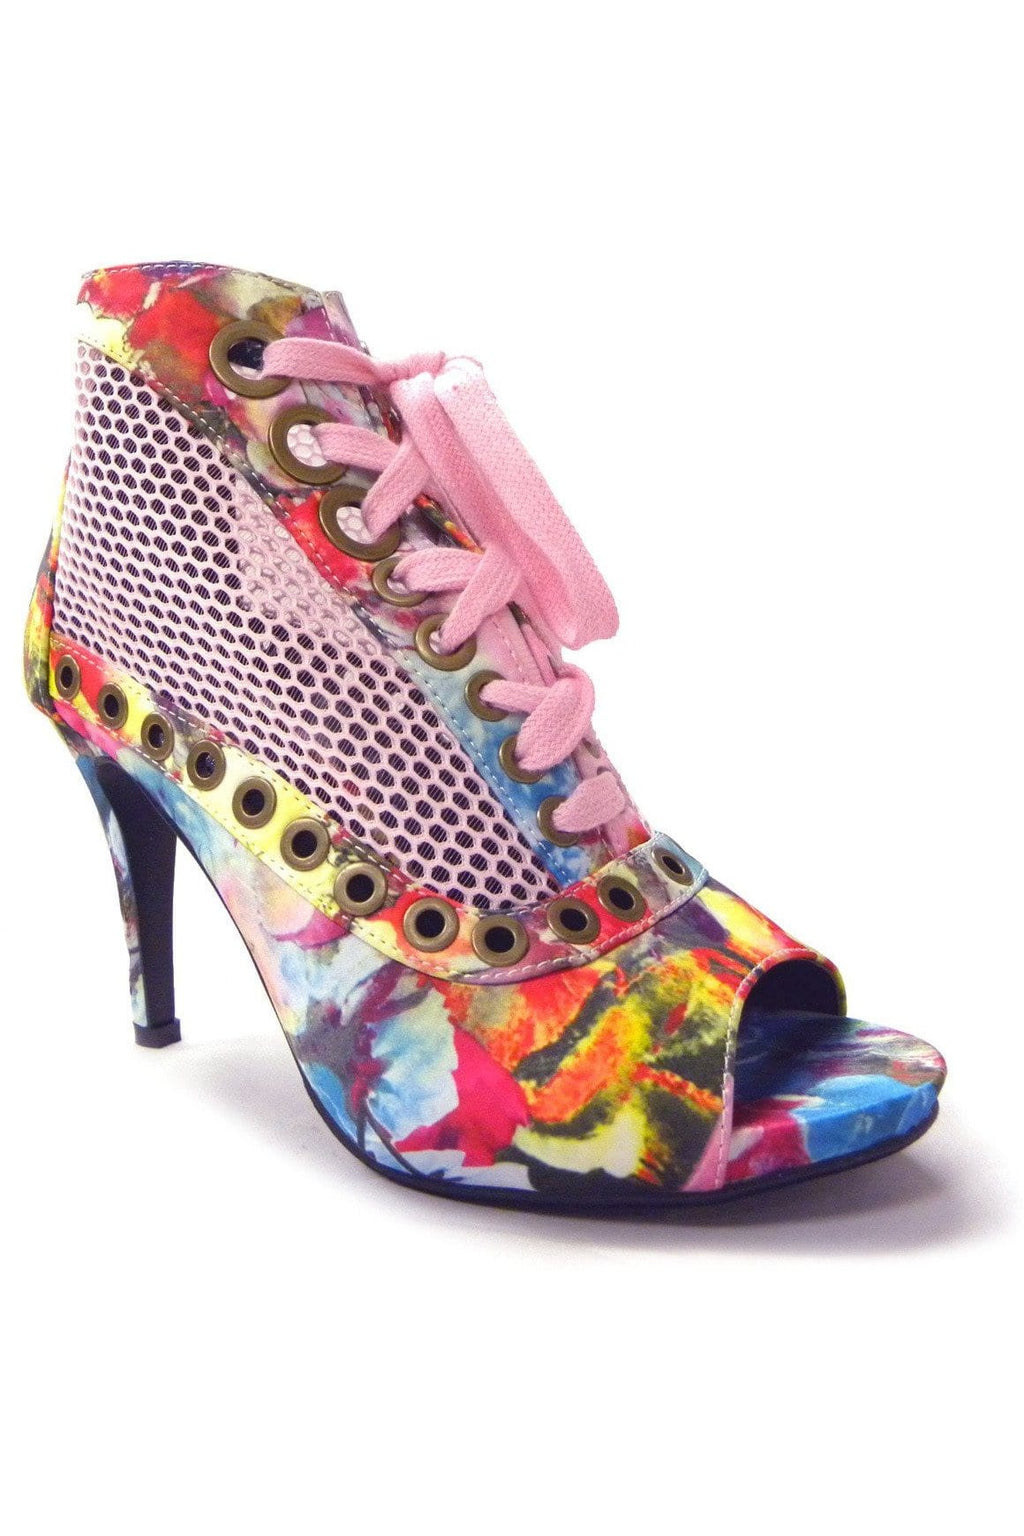 N.Y.L.A. SHOES HEELS 6 / PNK-TDYE N.Y.L.A. Shoes Sangrace Women's Lace Front Heels in Pink Tie Dye or Black Geo Print